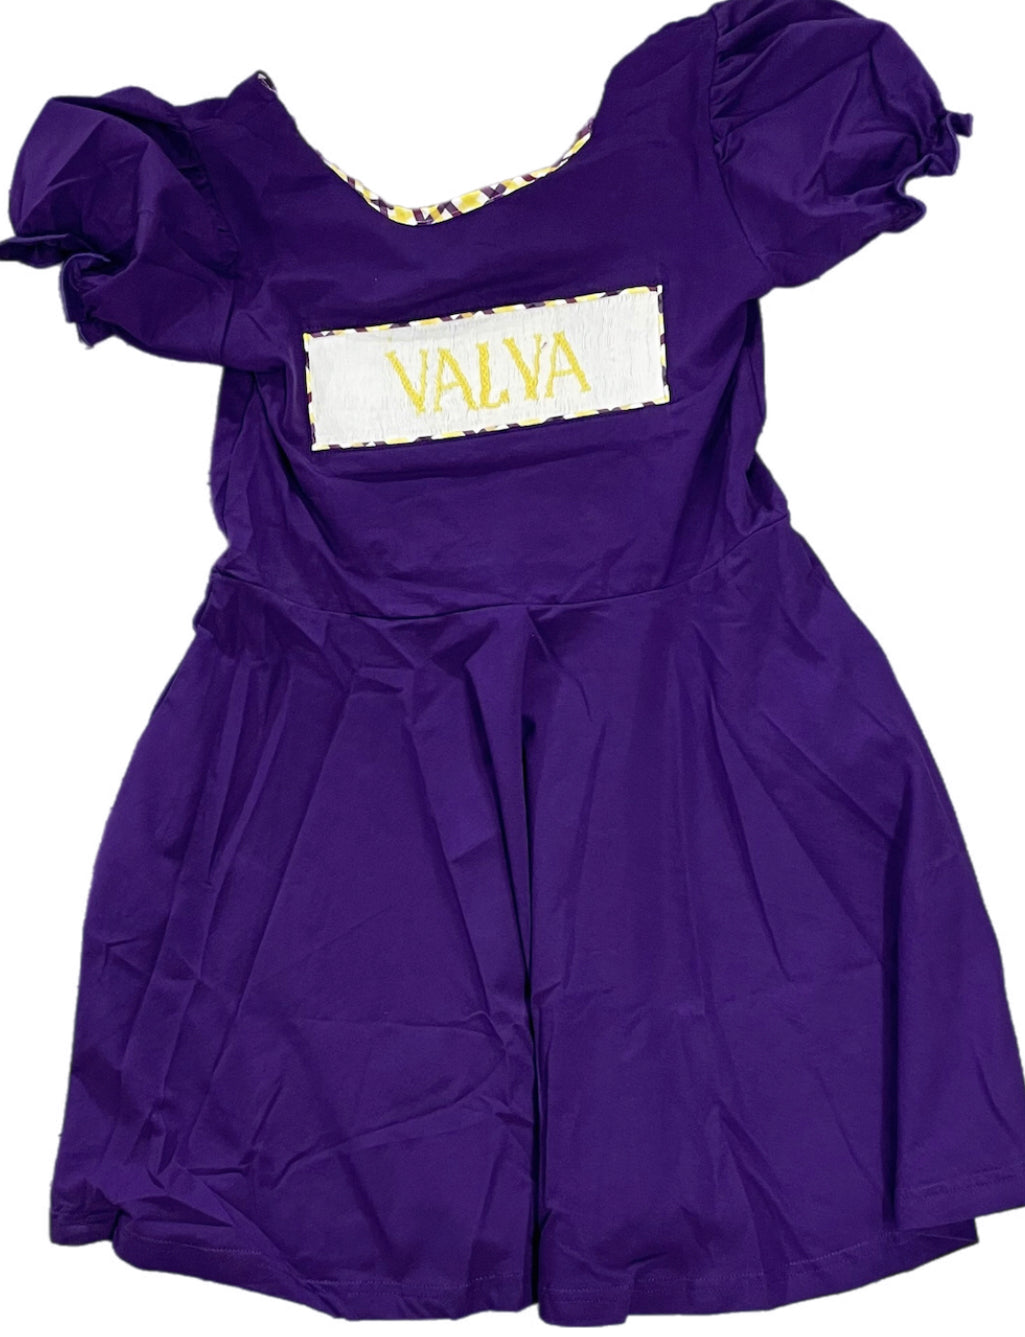 RTS: Girls Purple & Yellow Name Smock Knit Dress “Valva”